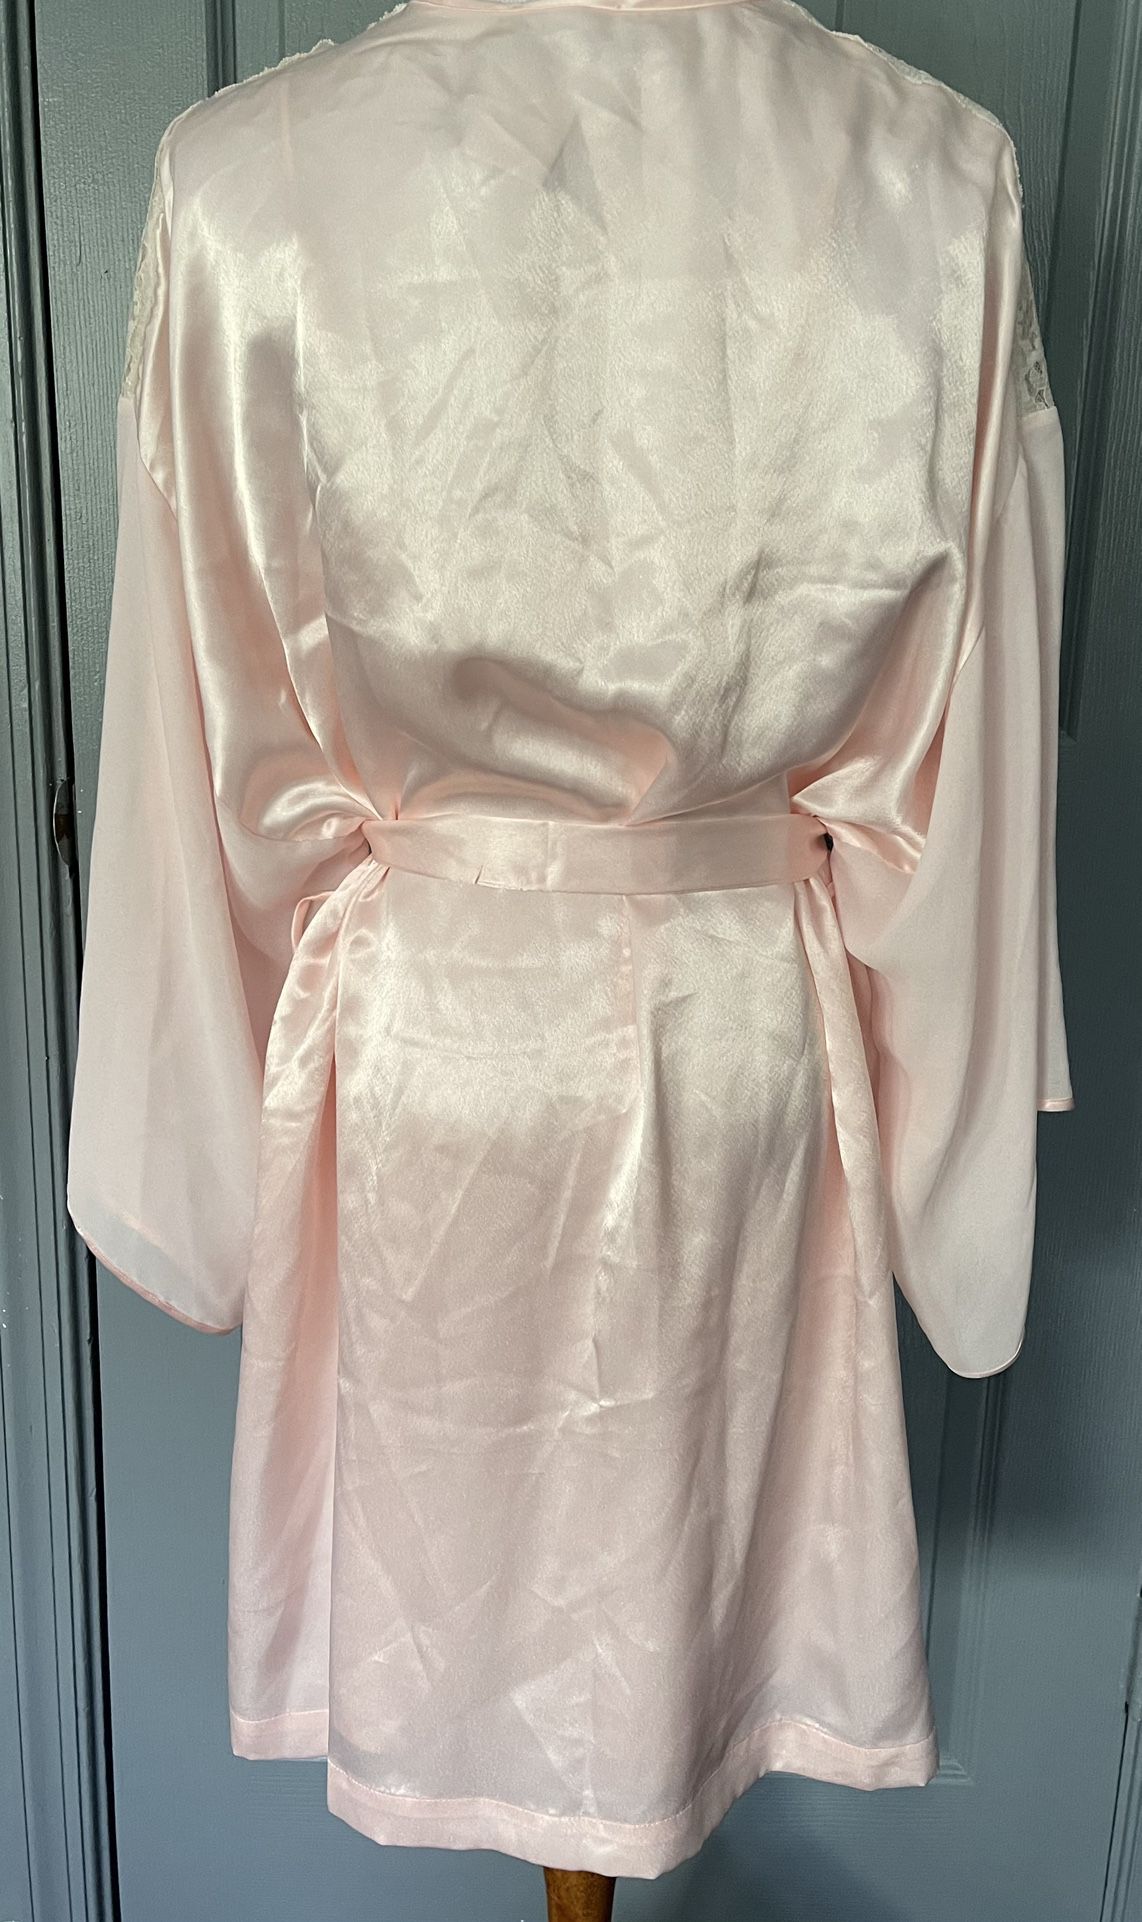 Val.Mode Silky Satin Pink Floral Embroidered Vintage Kimono Robe & Nightgown Set.